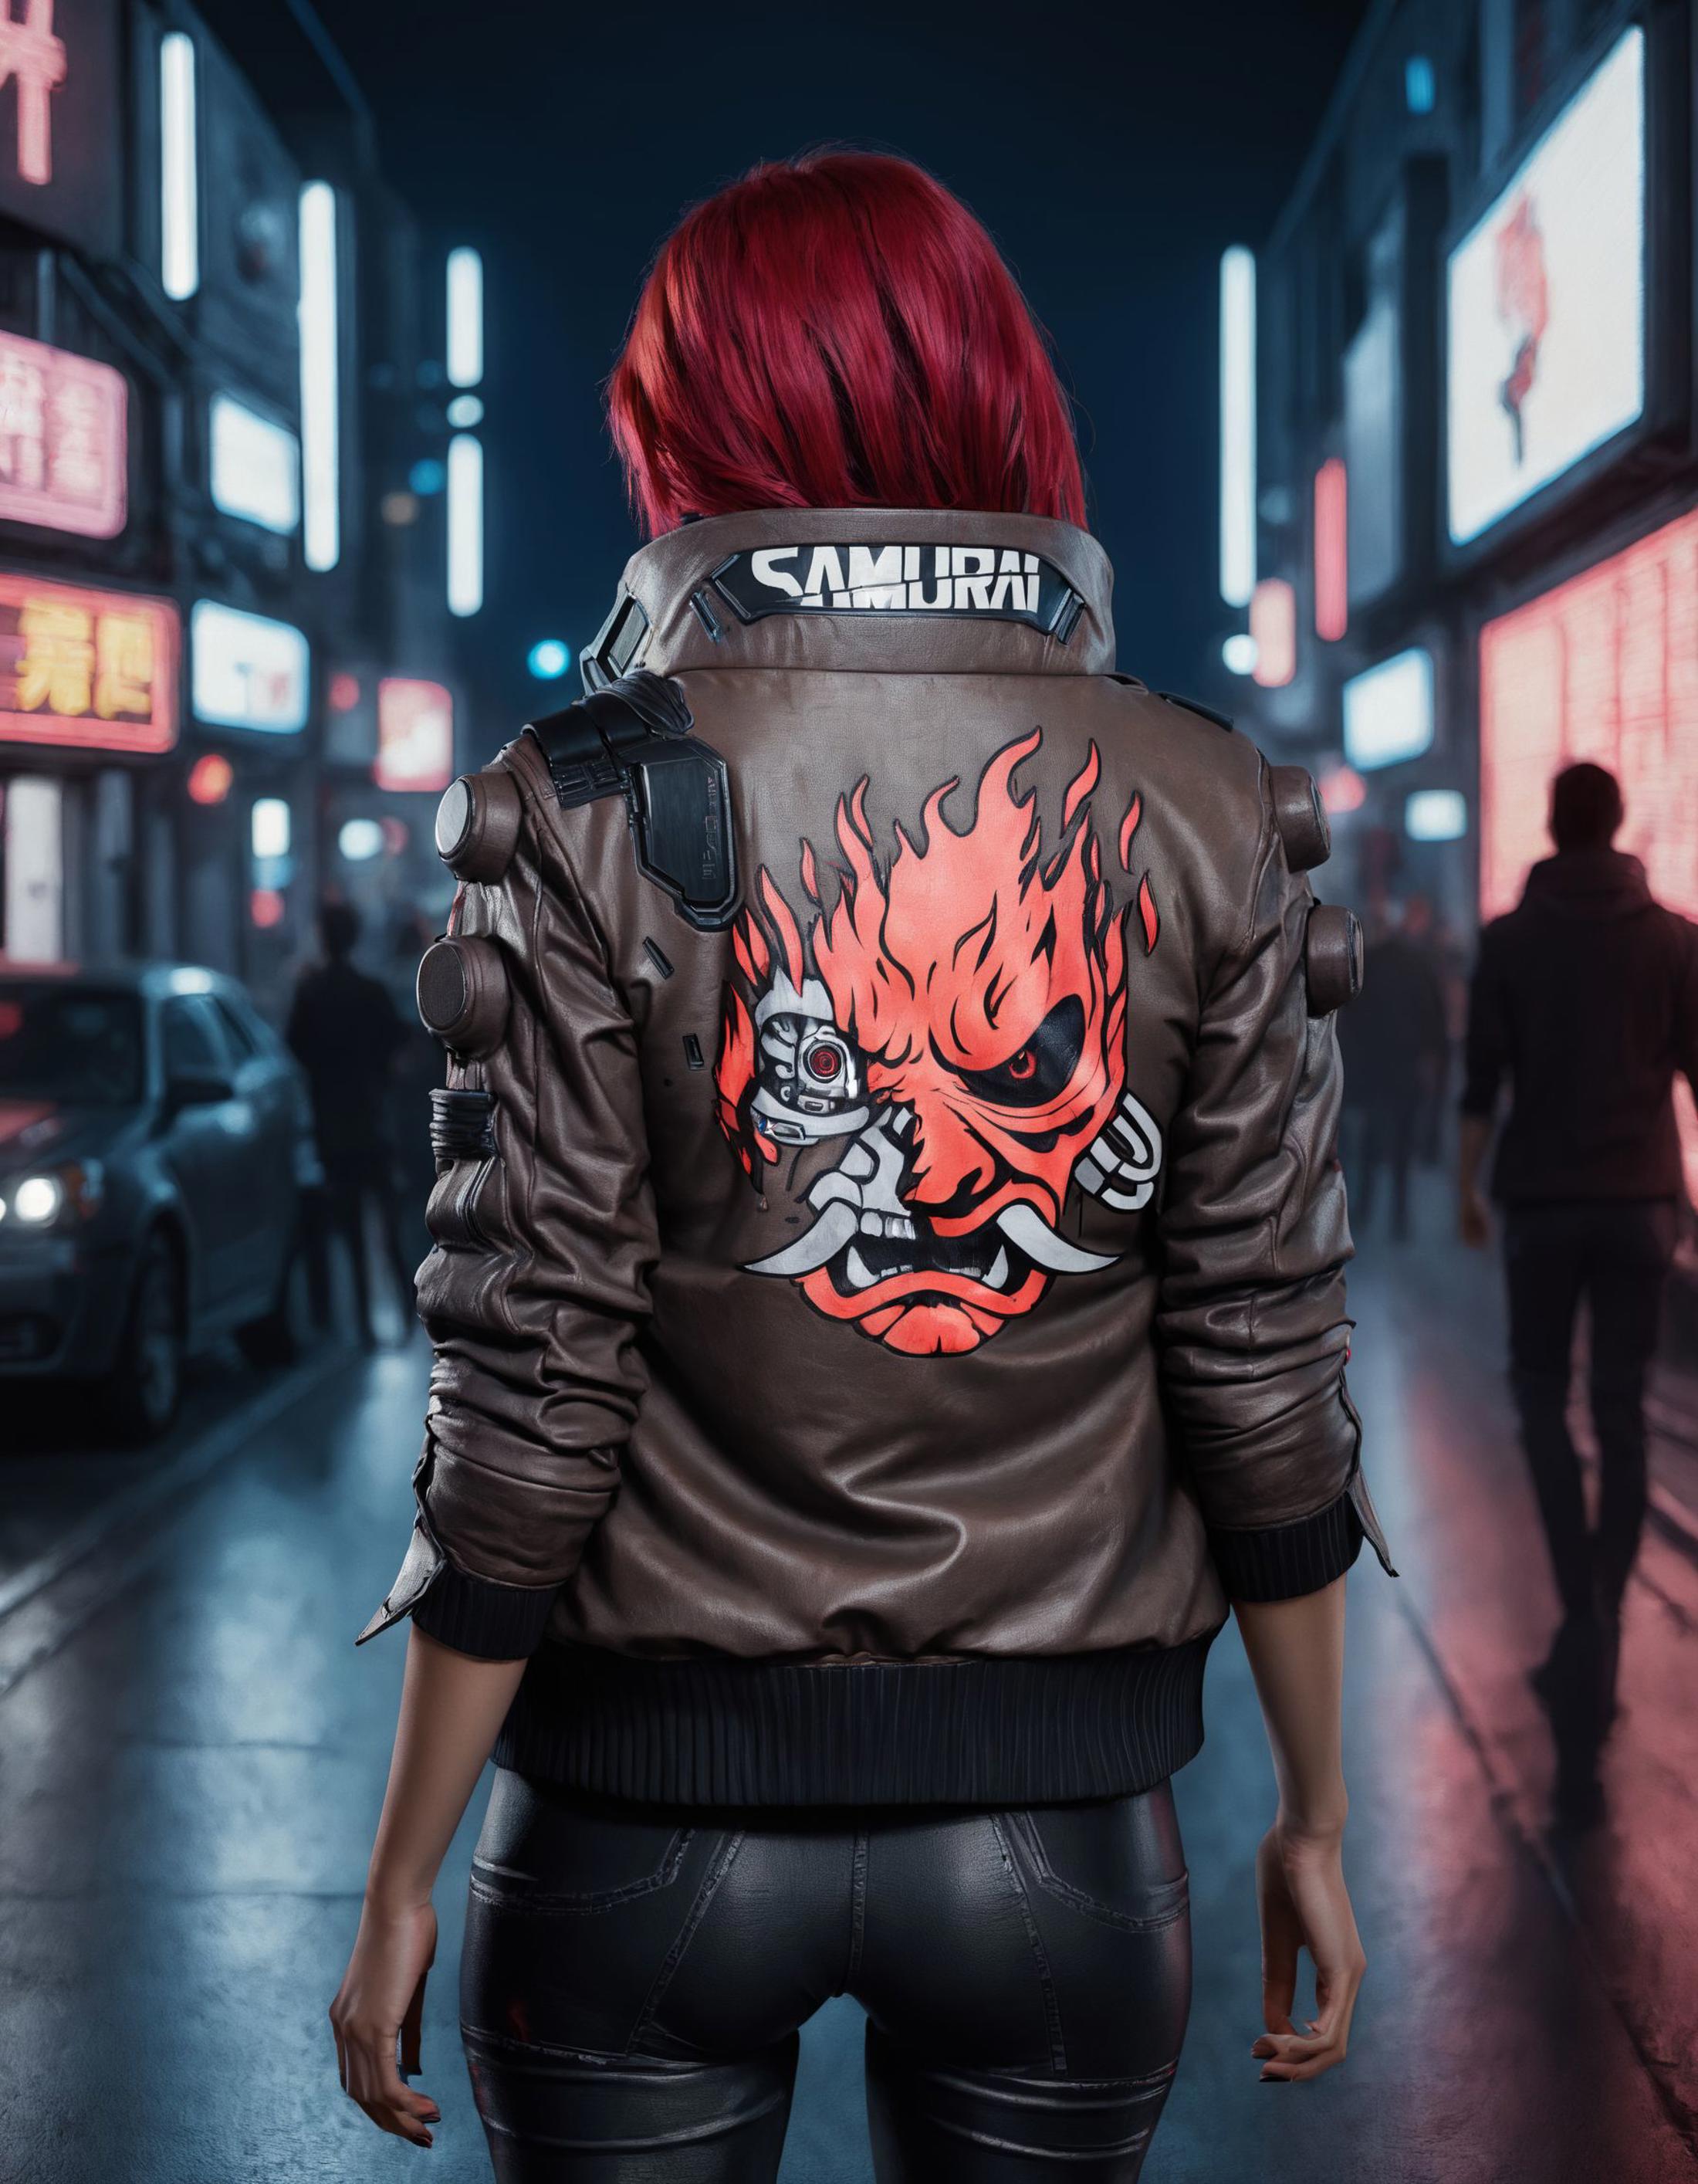 Cyberpunk Samurai Jacket SDXL image by diggydre